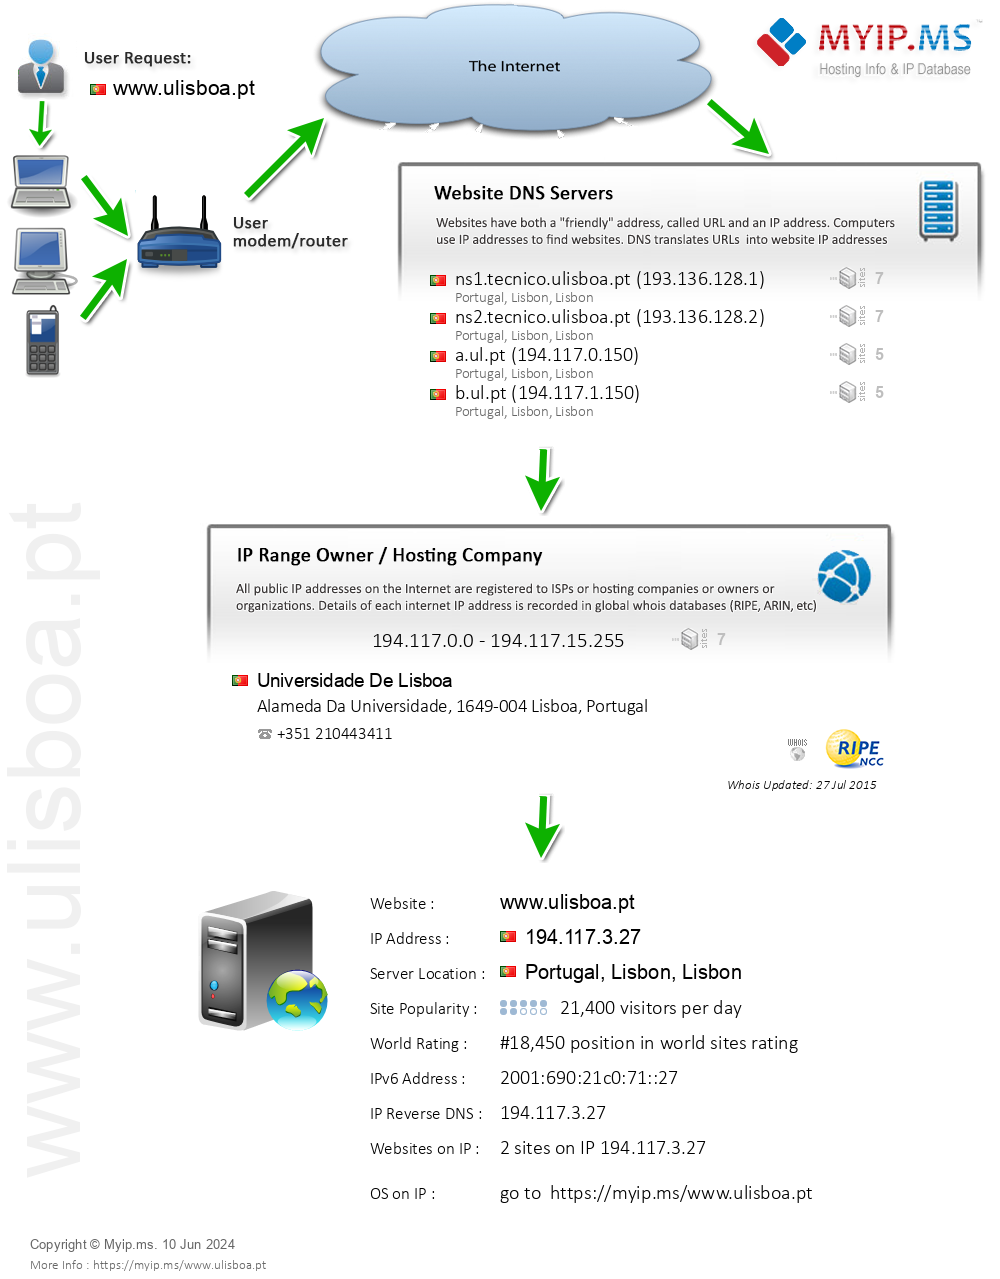 Ulisboa.pt - Website Hosting Visual IP Diagram